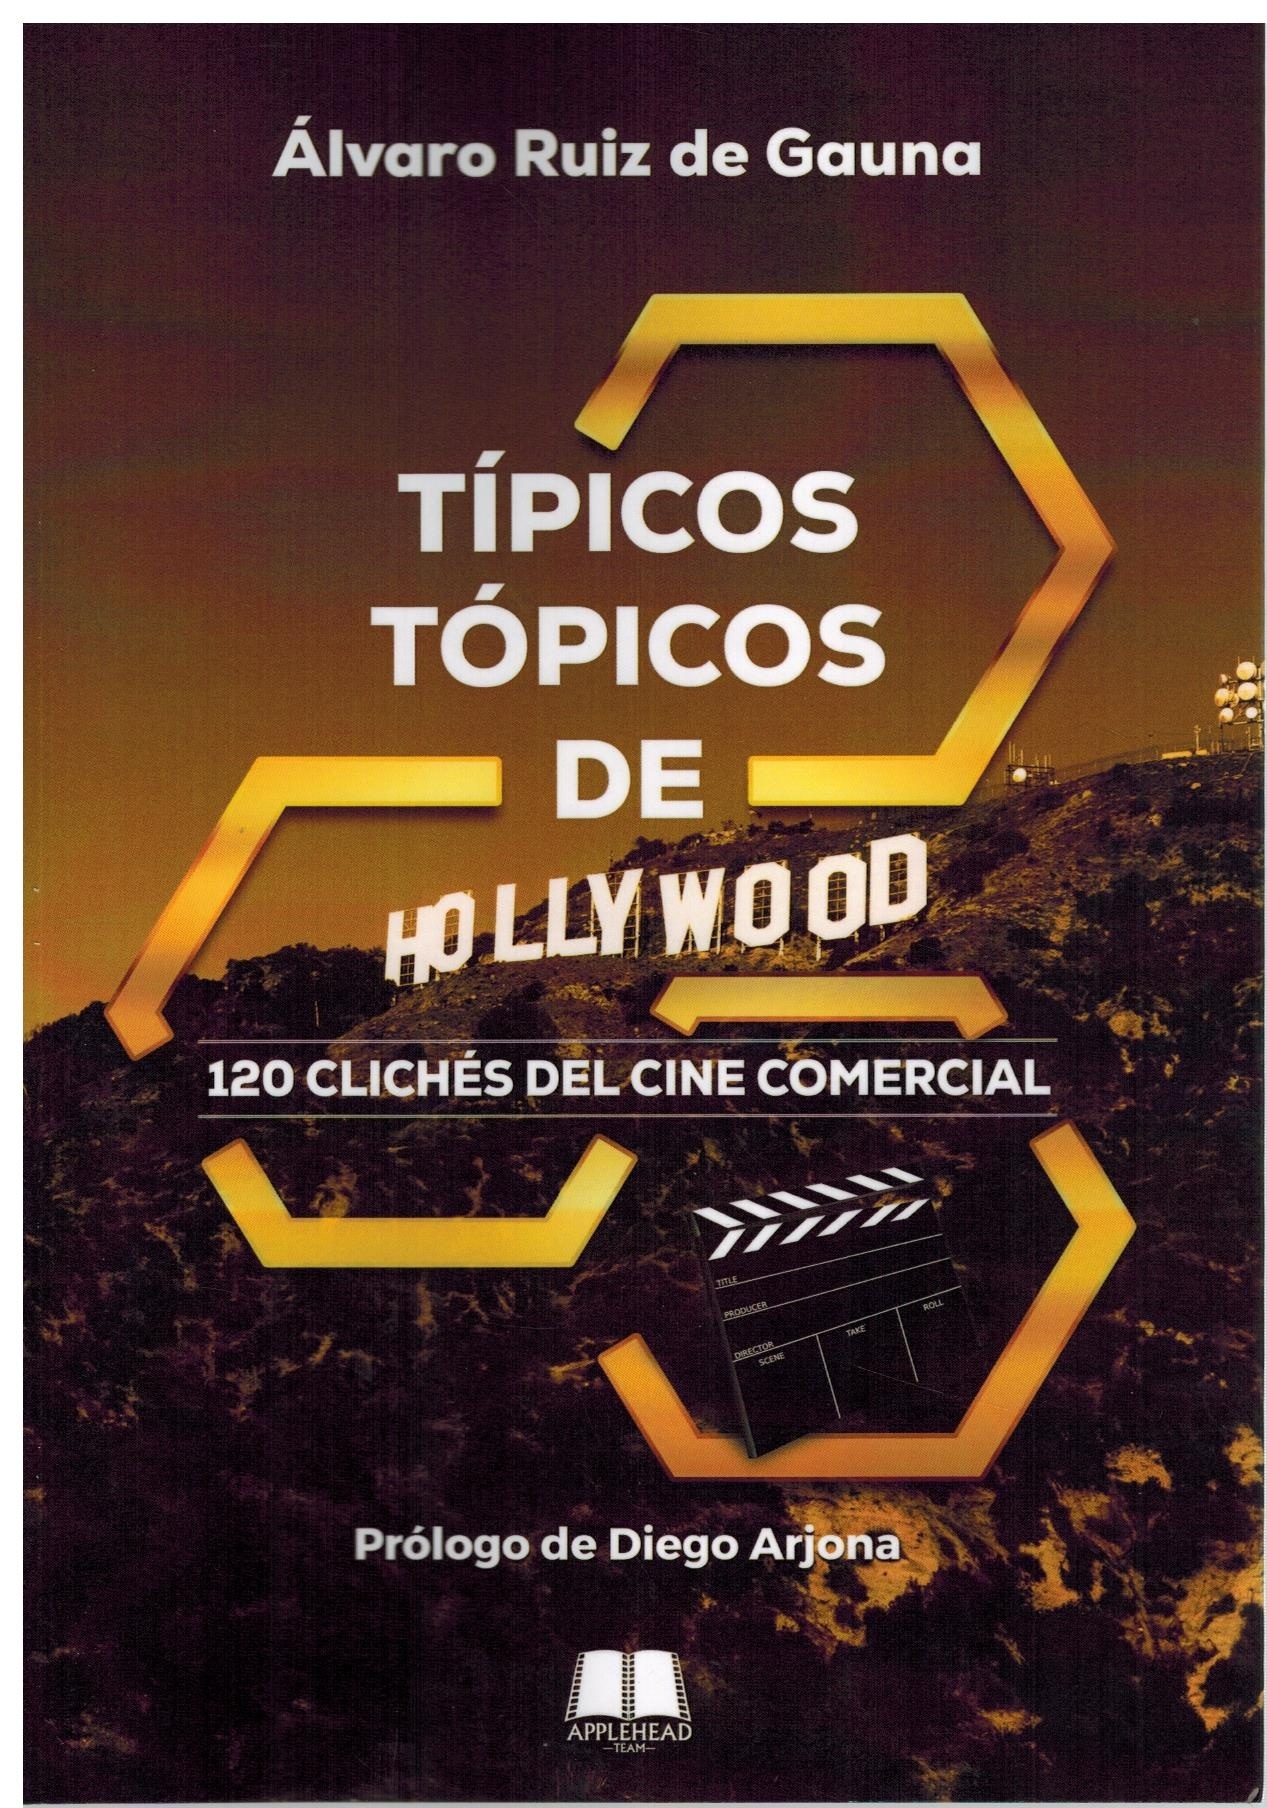 Típicos tópicos de Hollywood. 120 clichés del cine comercial. 